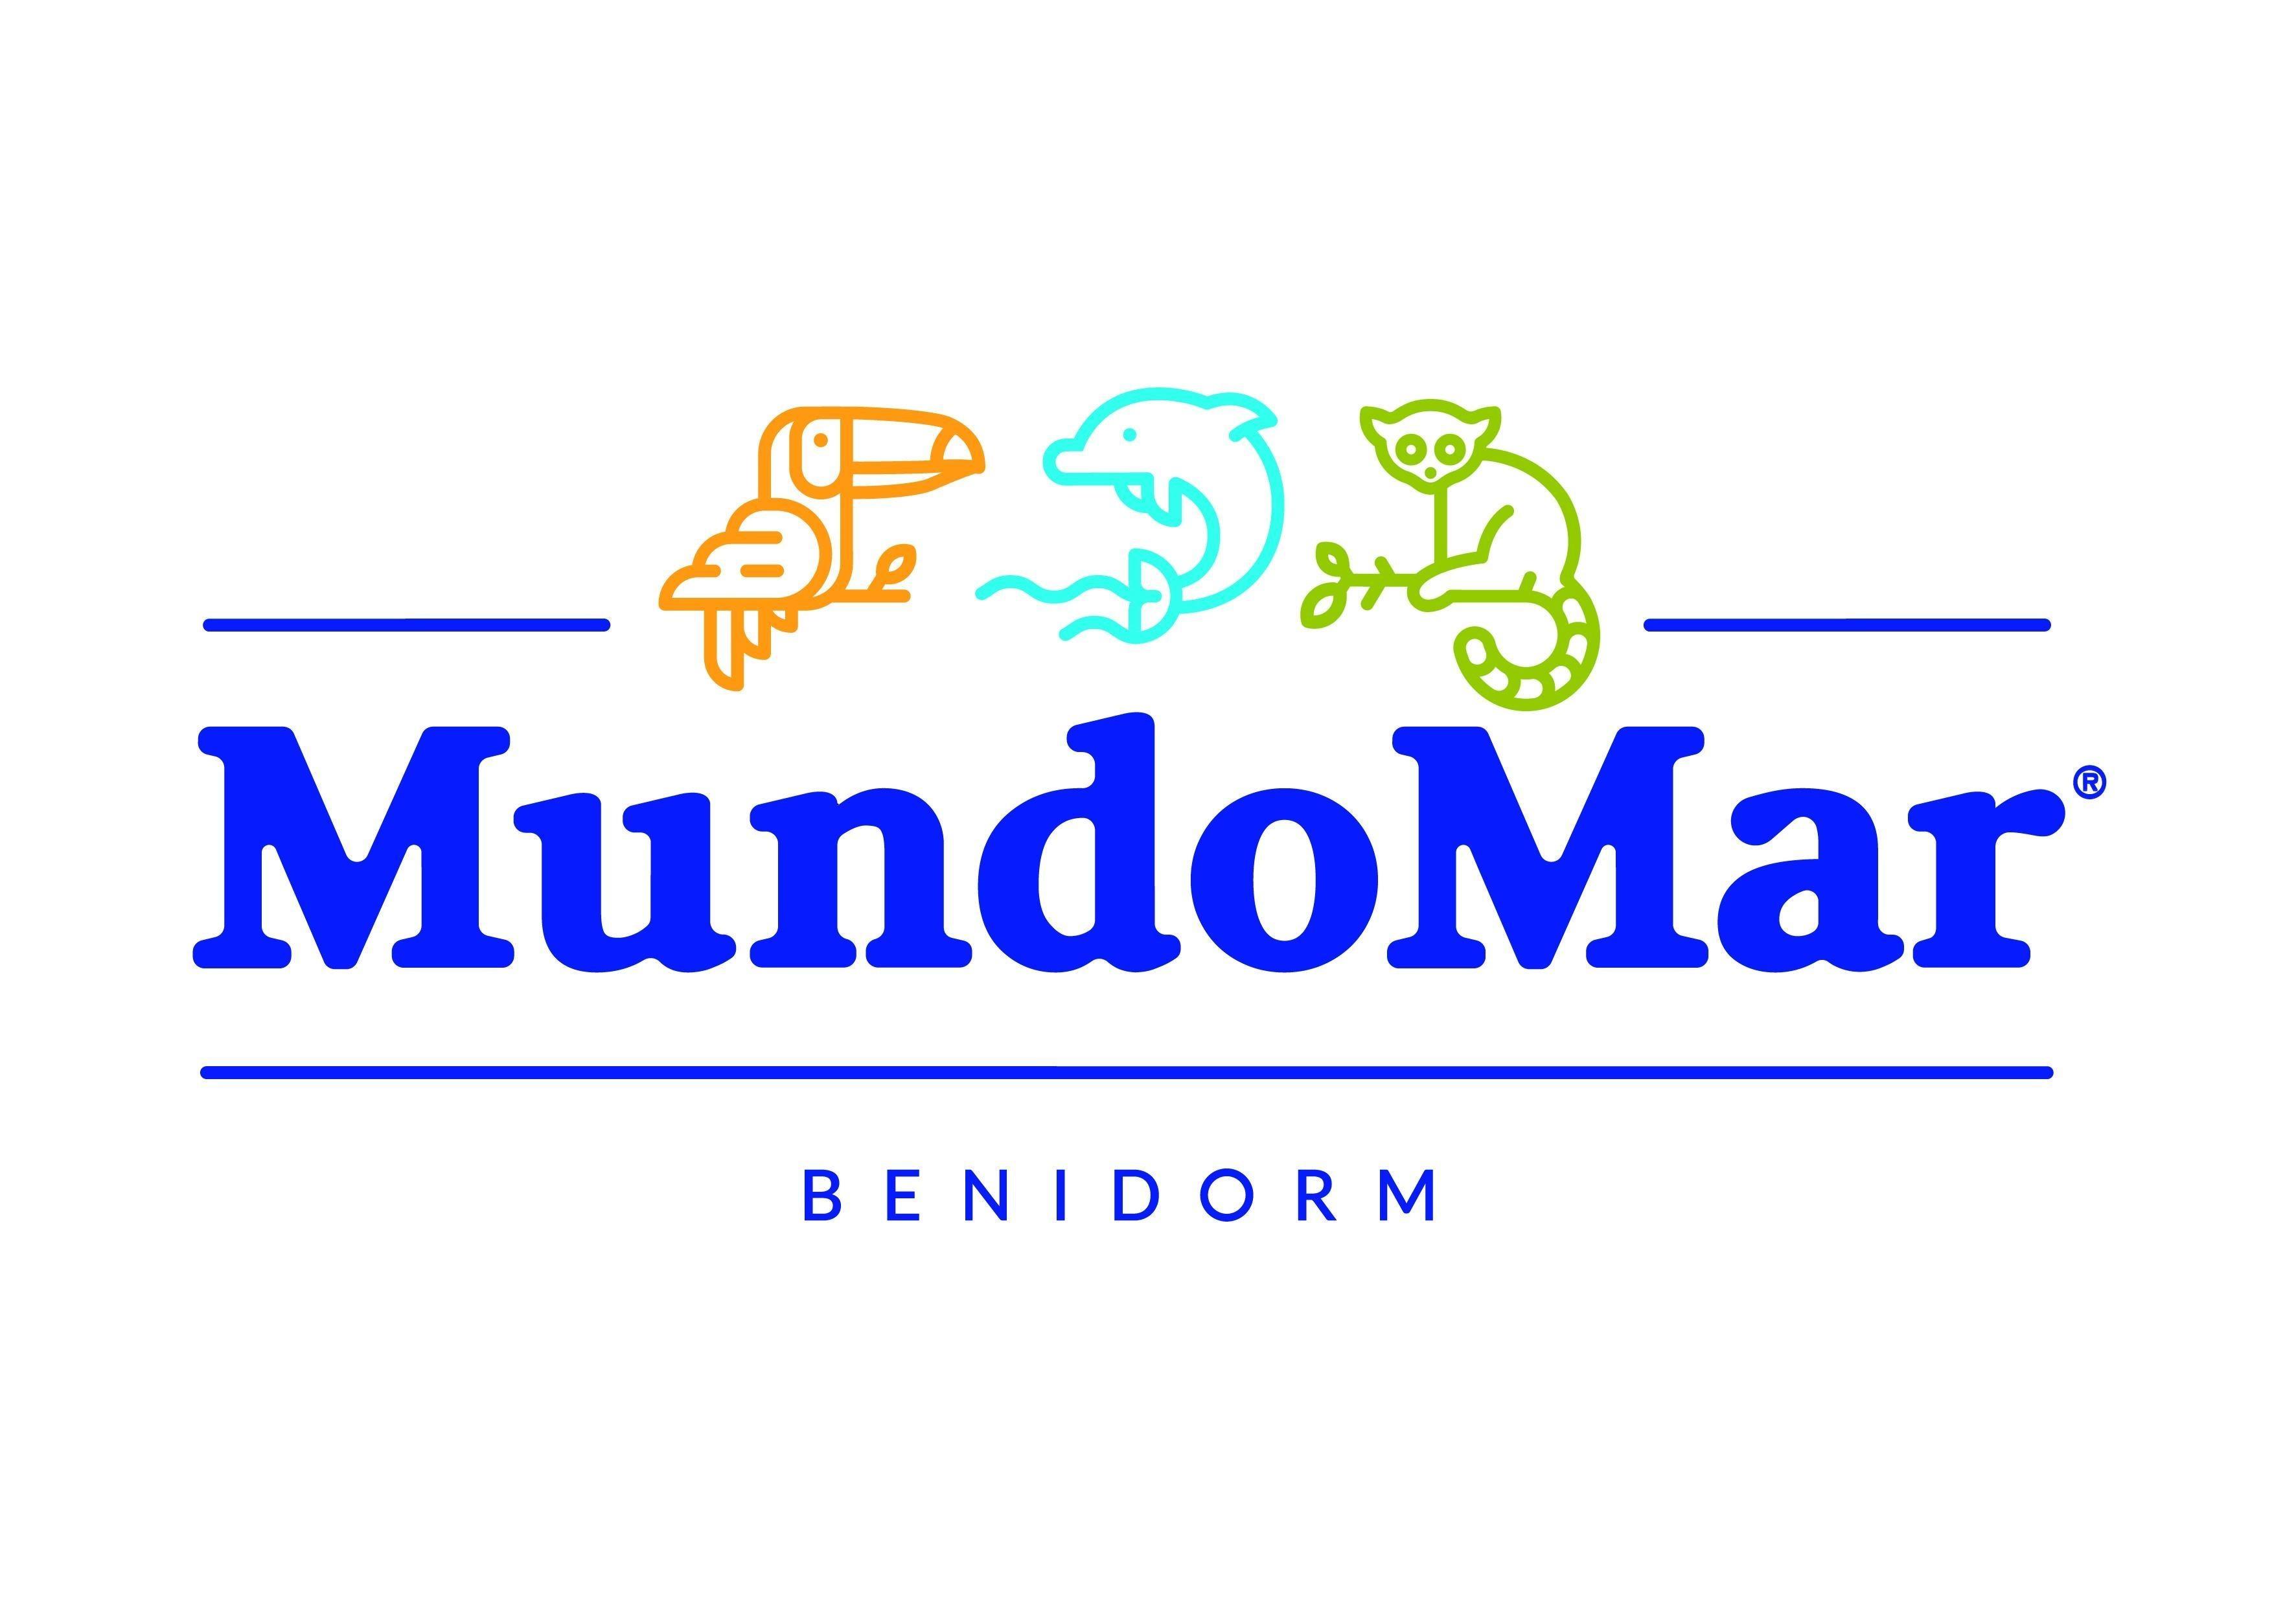 Mundomar Theme Park Benidorm 